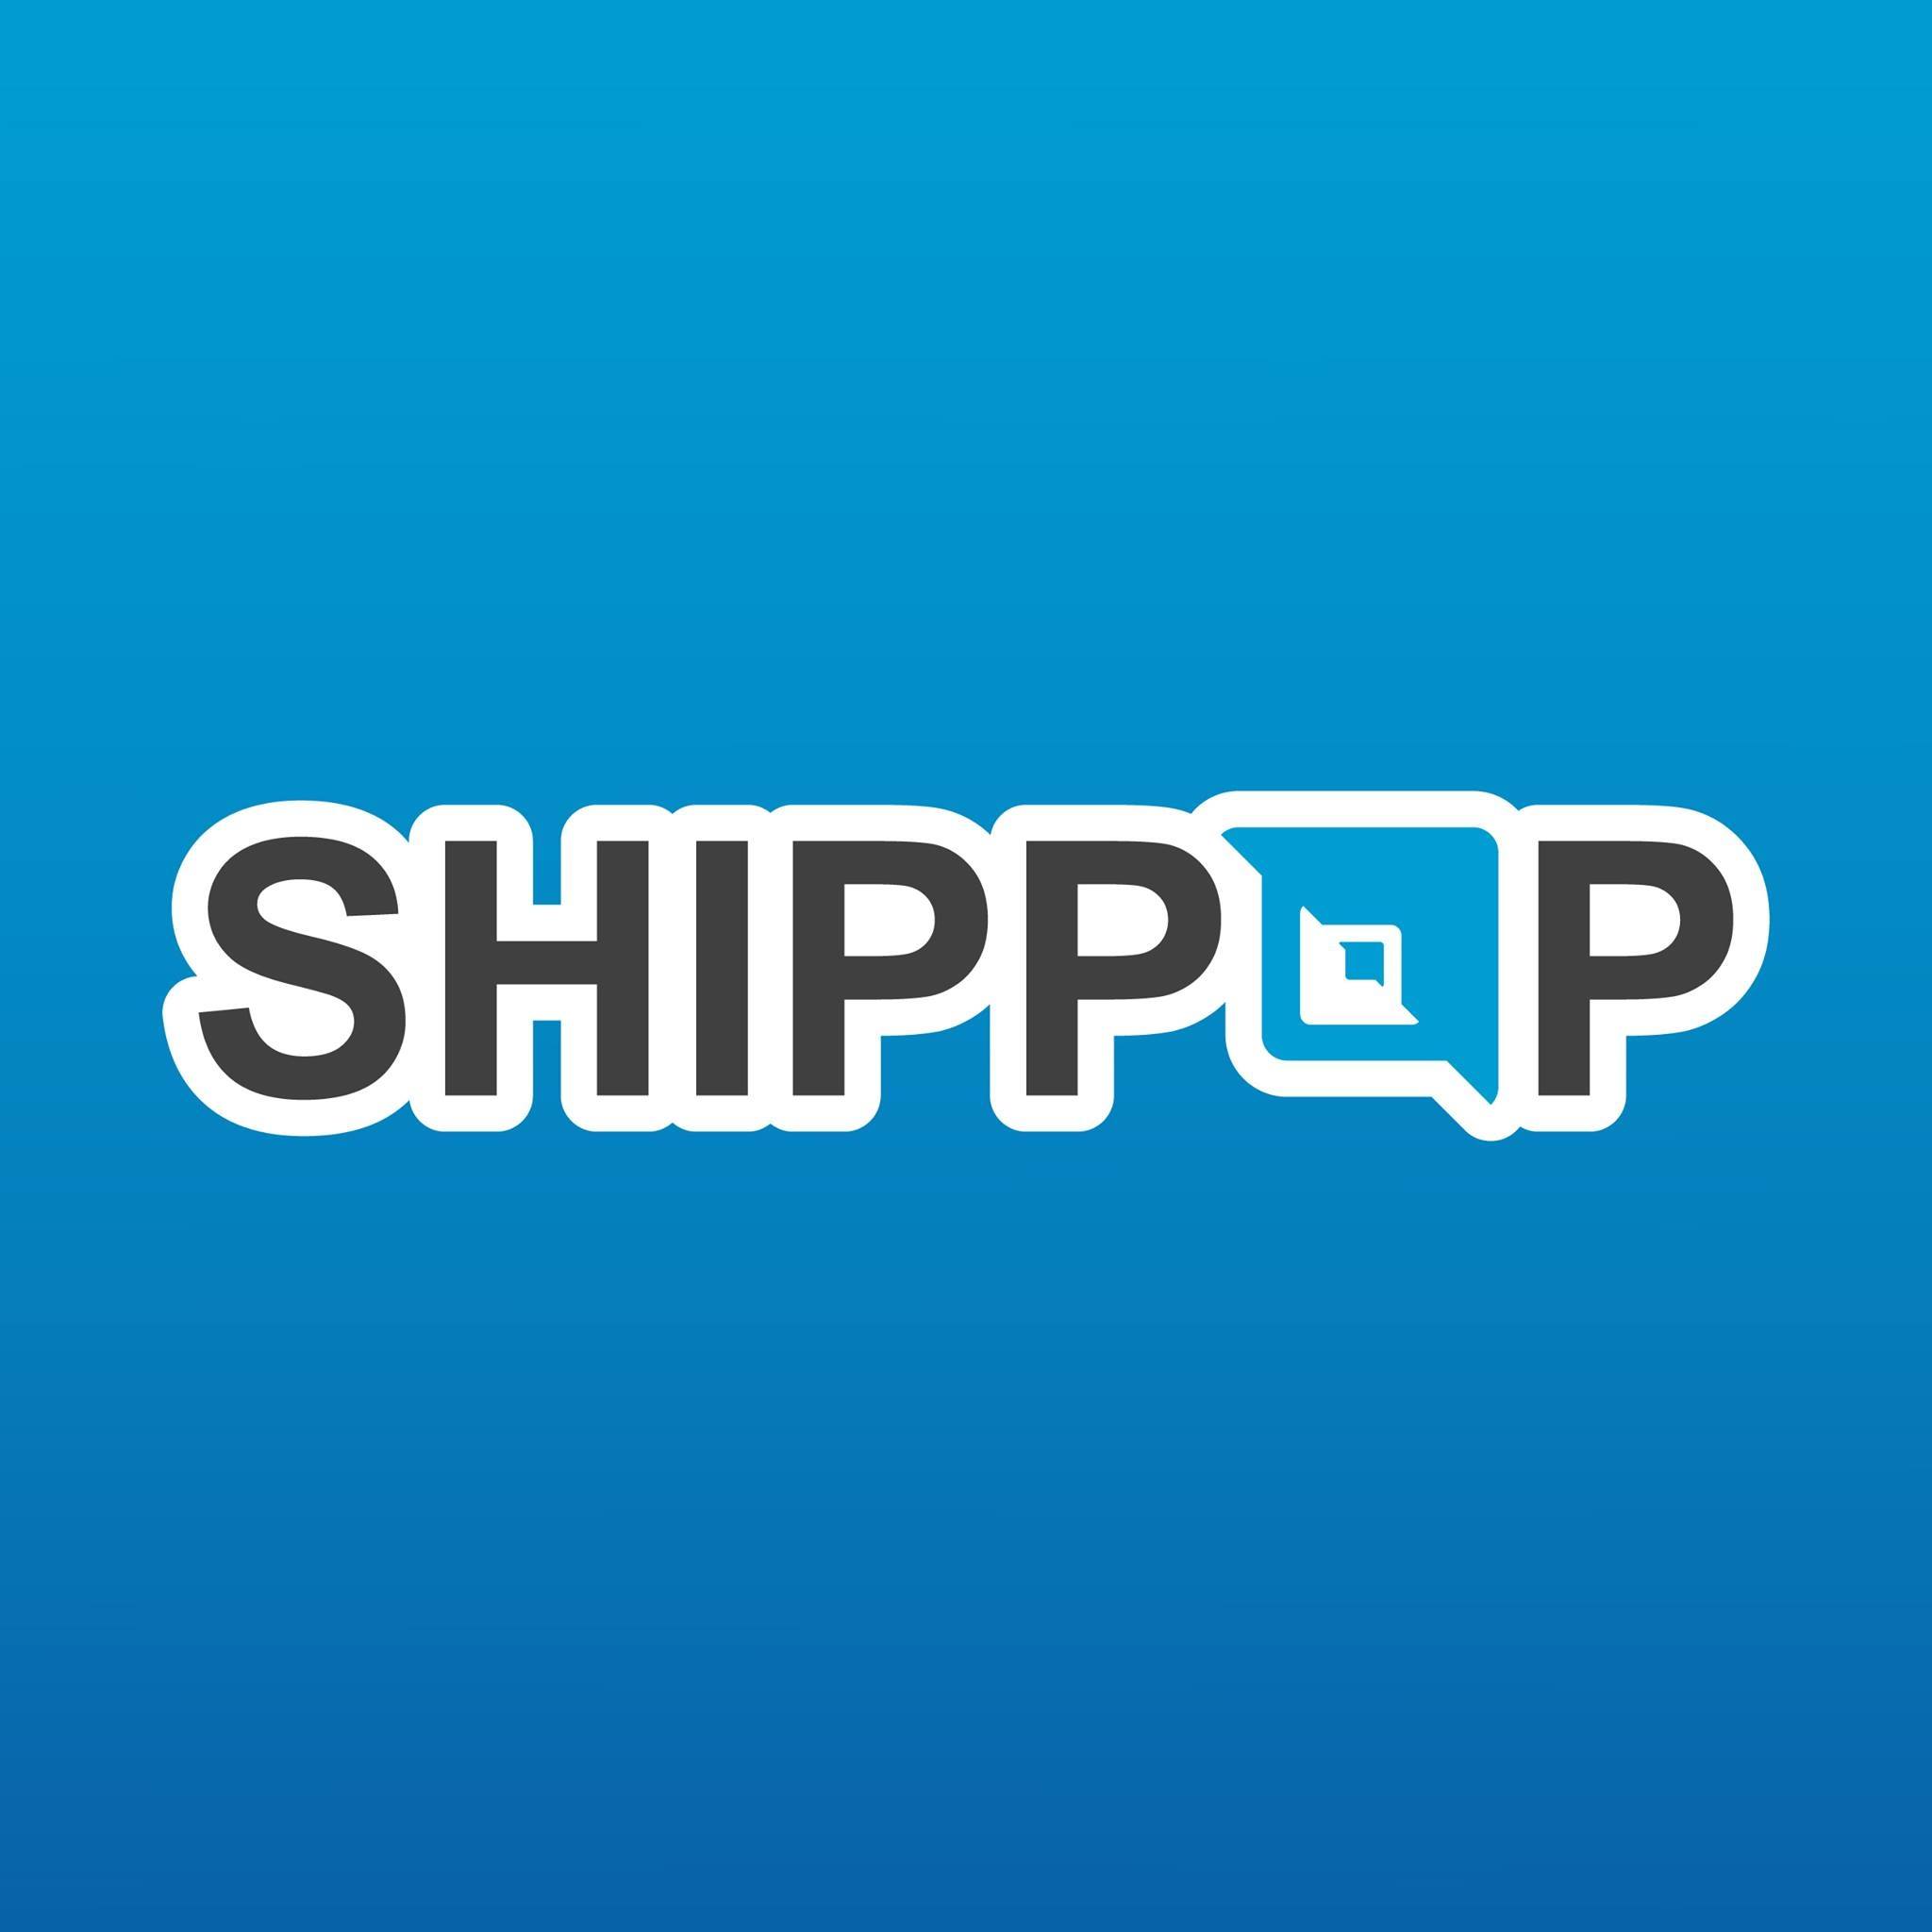 Shippop